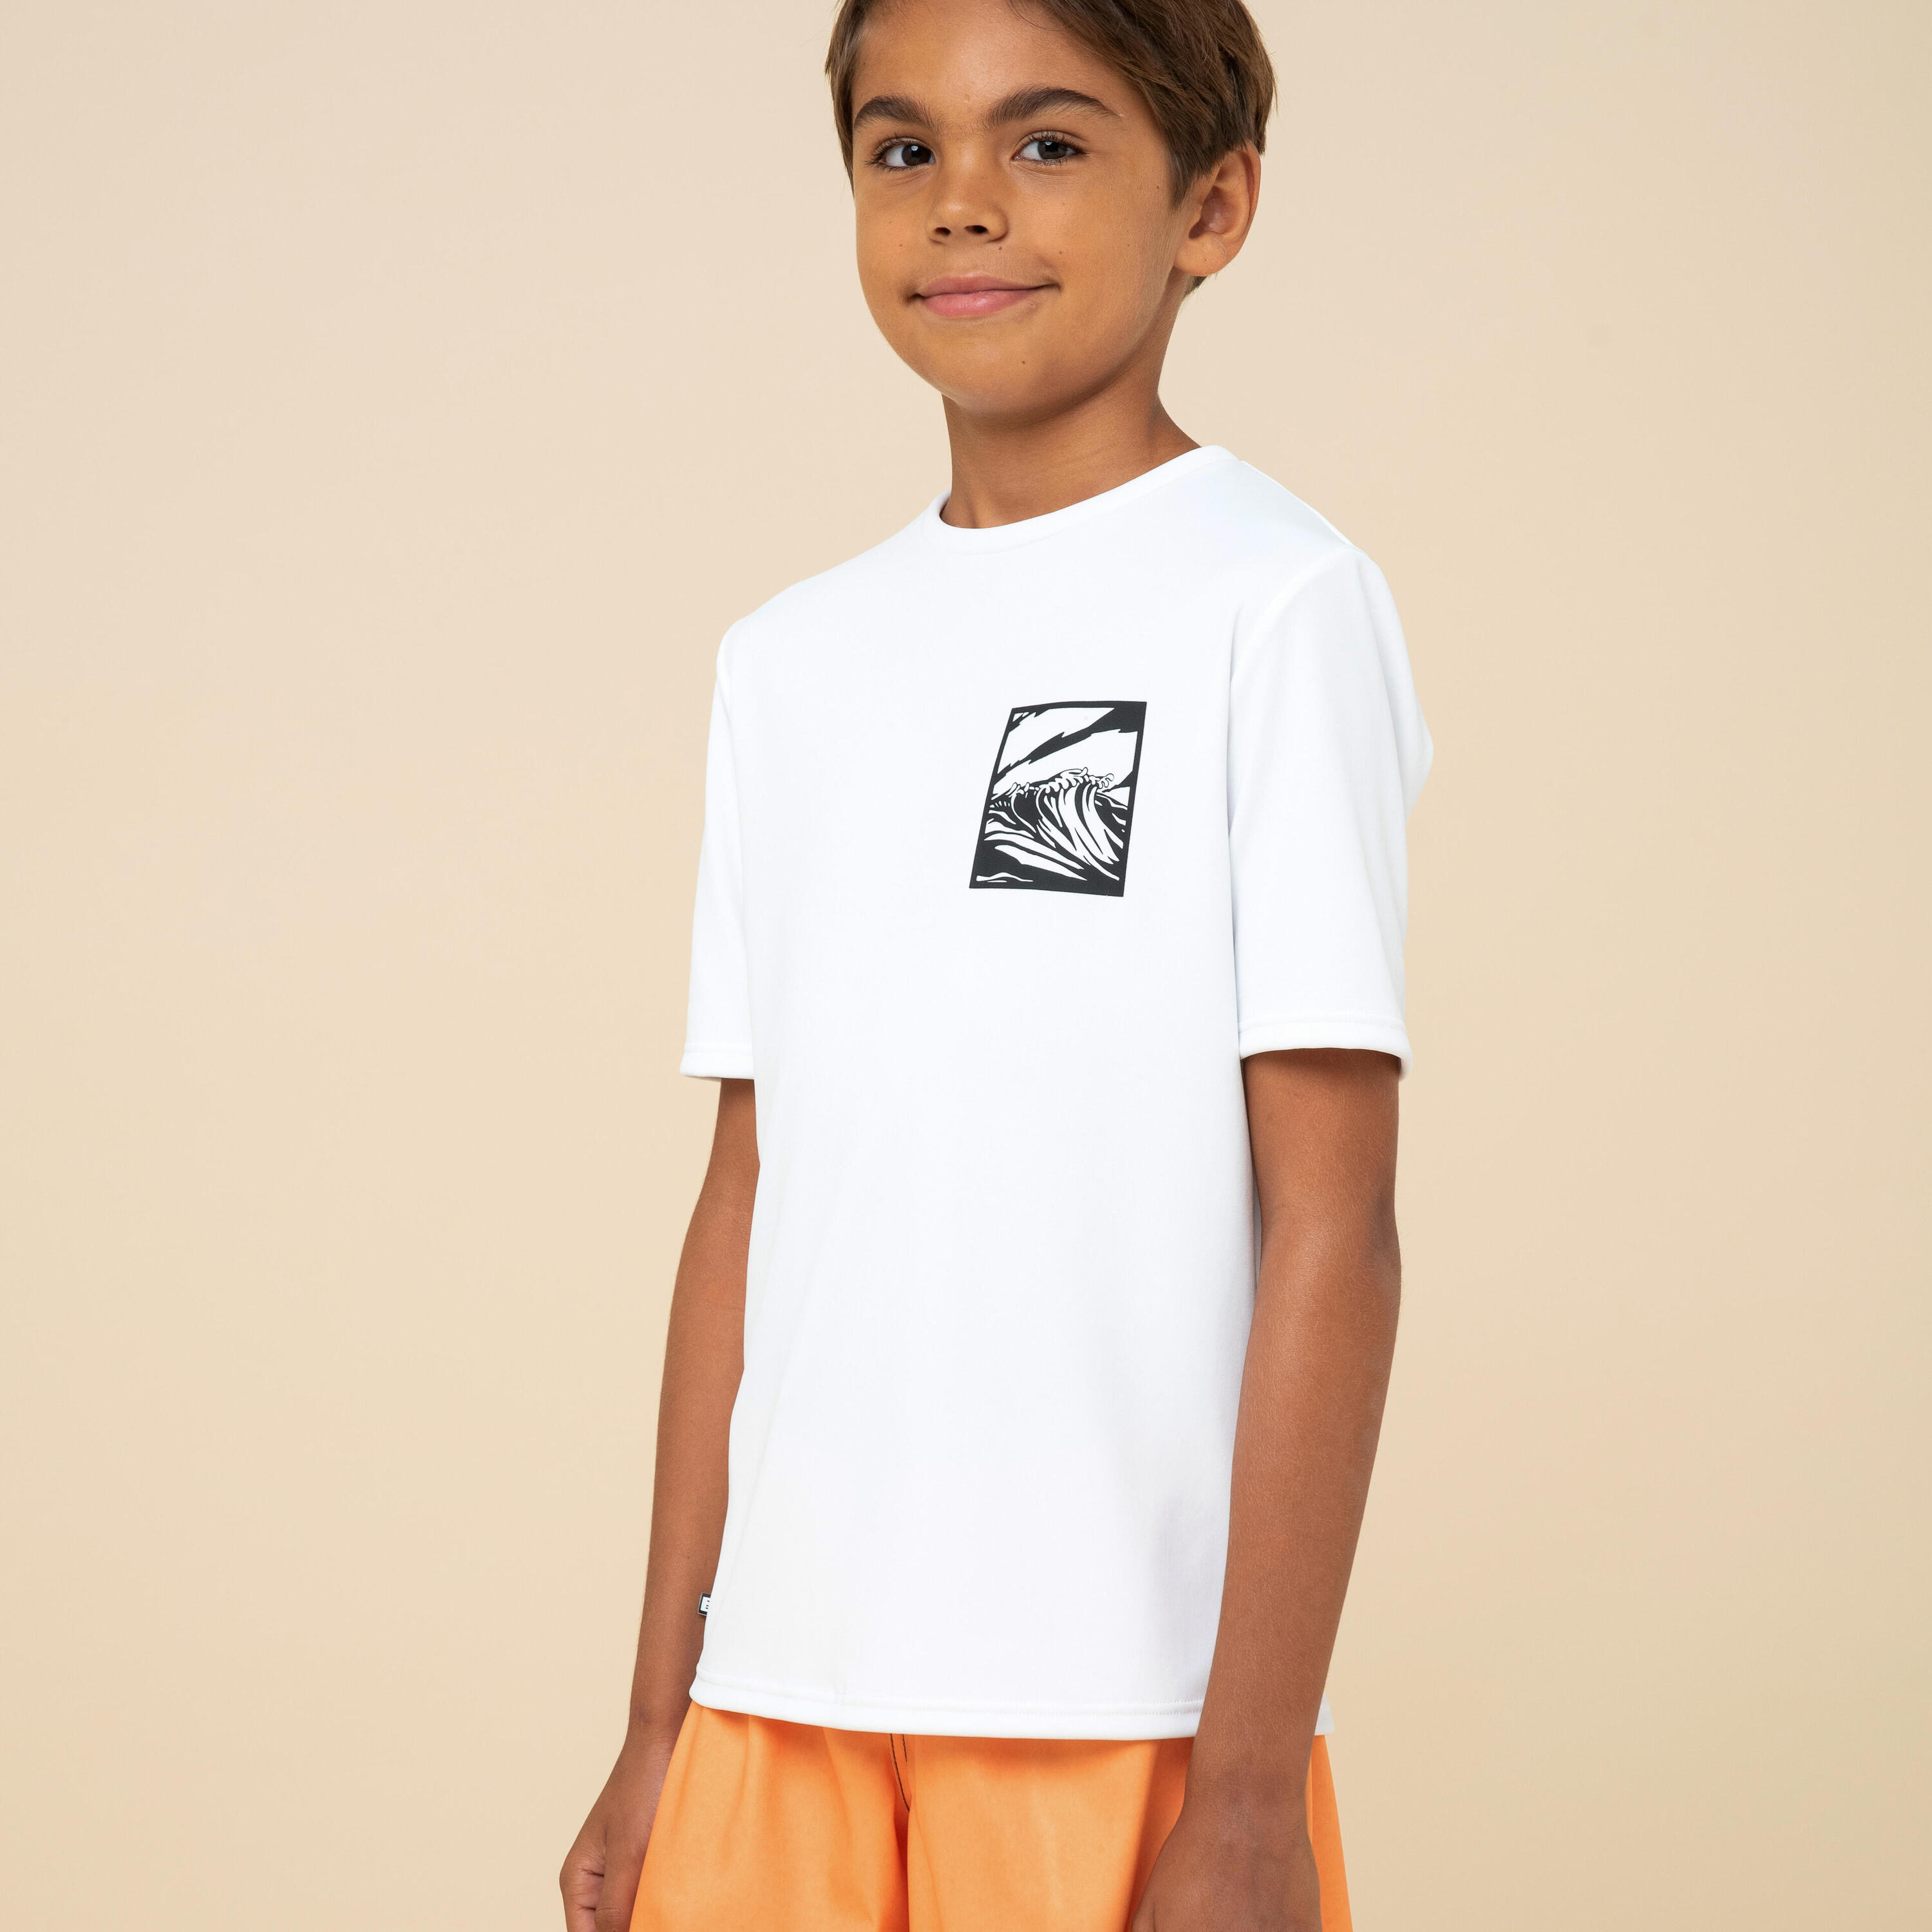 Kid’s Surfing Skating Short-sleeved Water T-Shirt 4/10